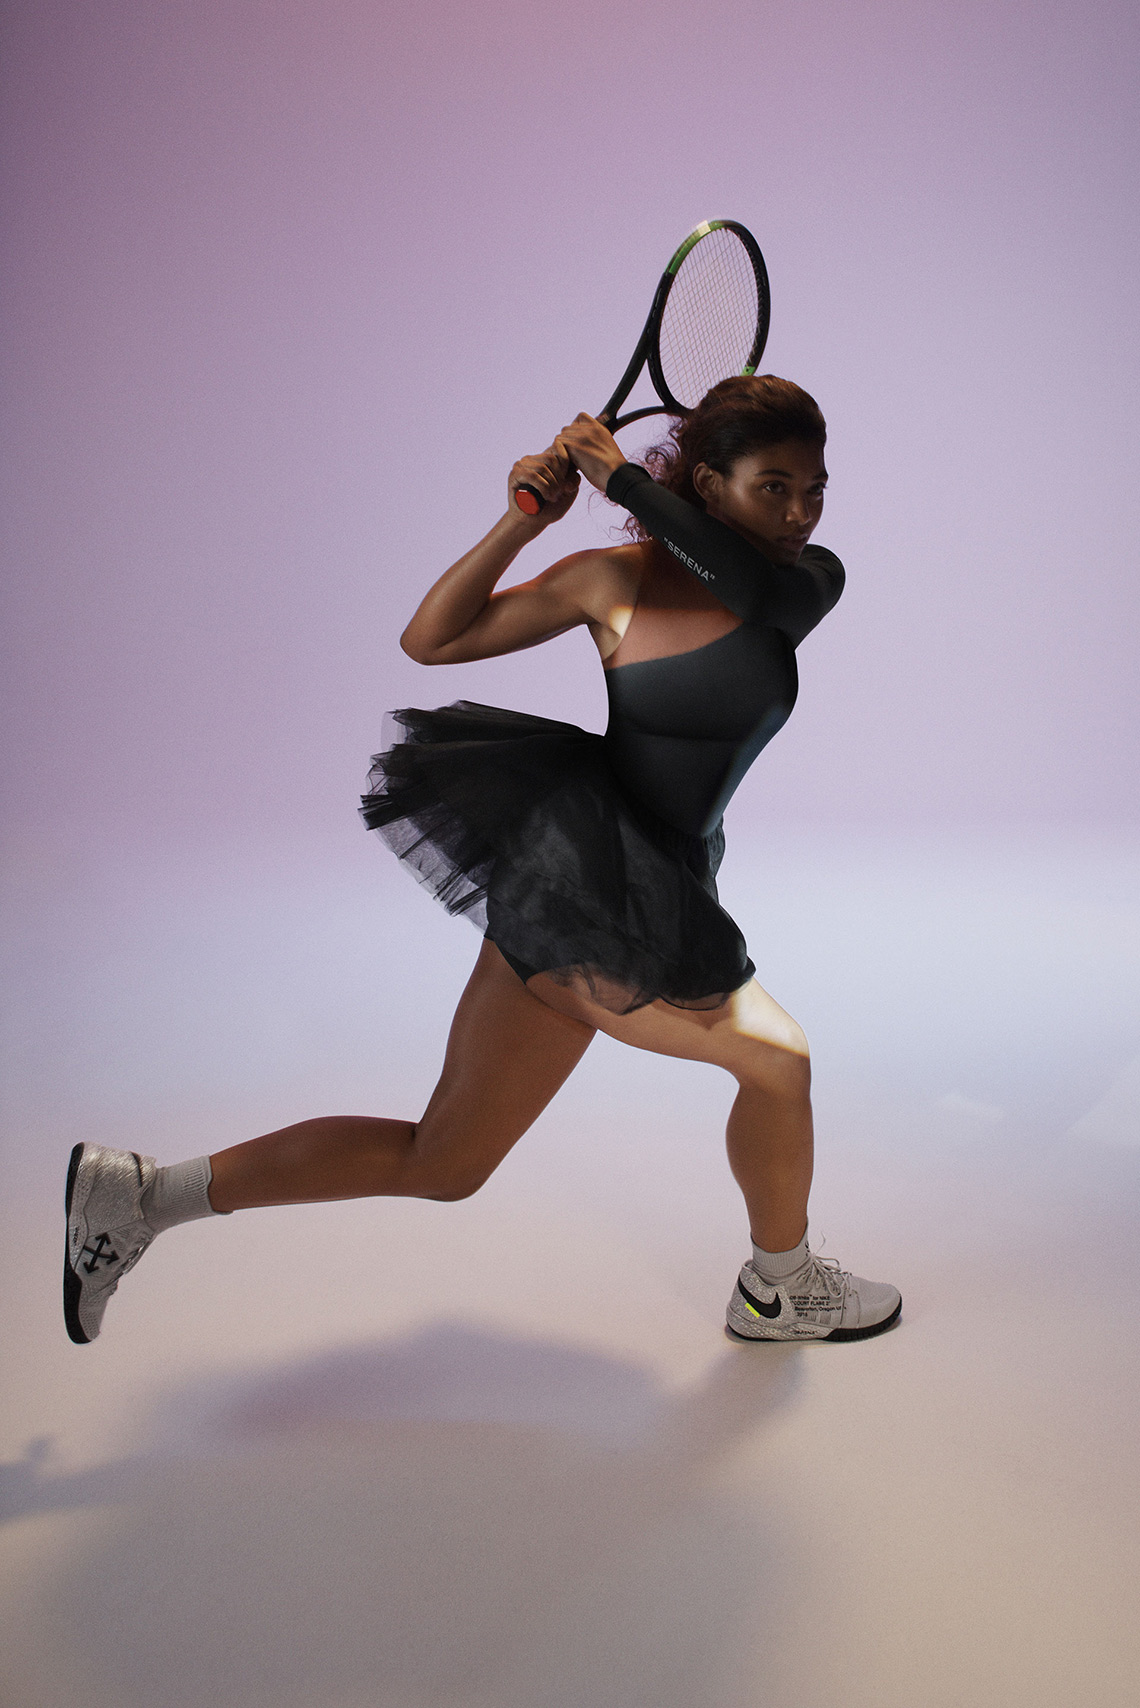 Serena Williams Virgil Abloh Nike Nikecourt Dress Us Open 2